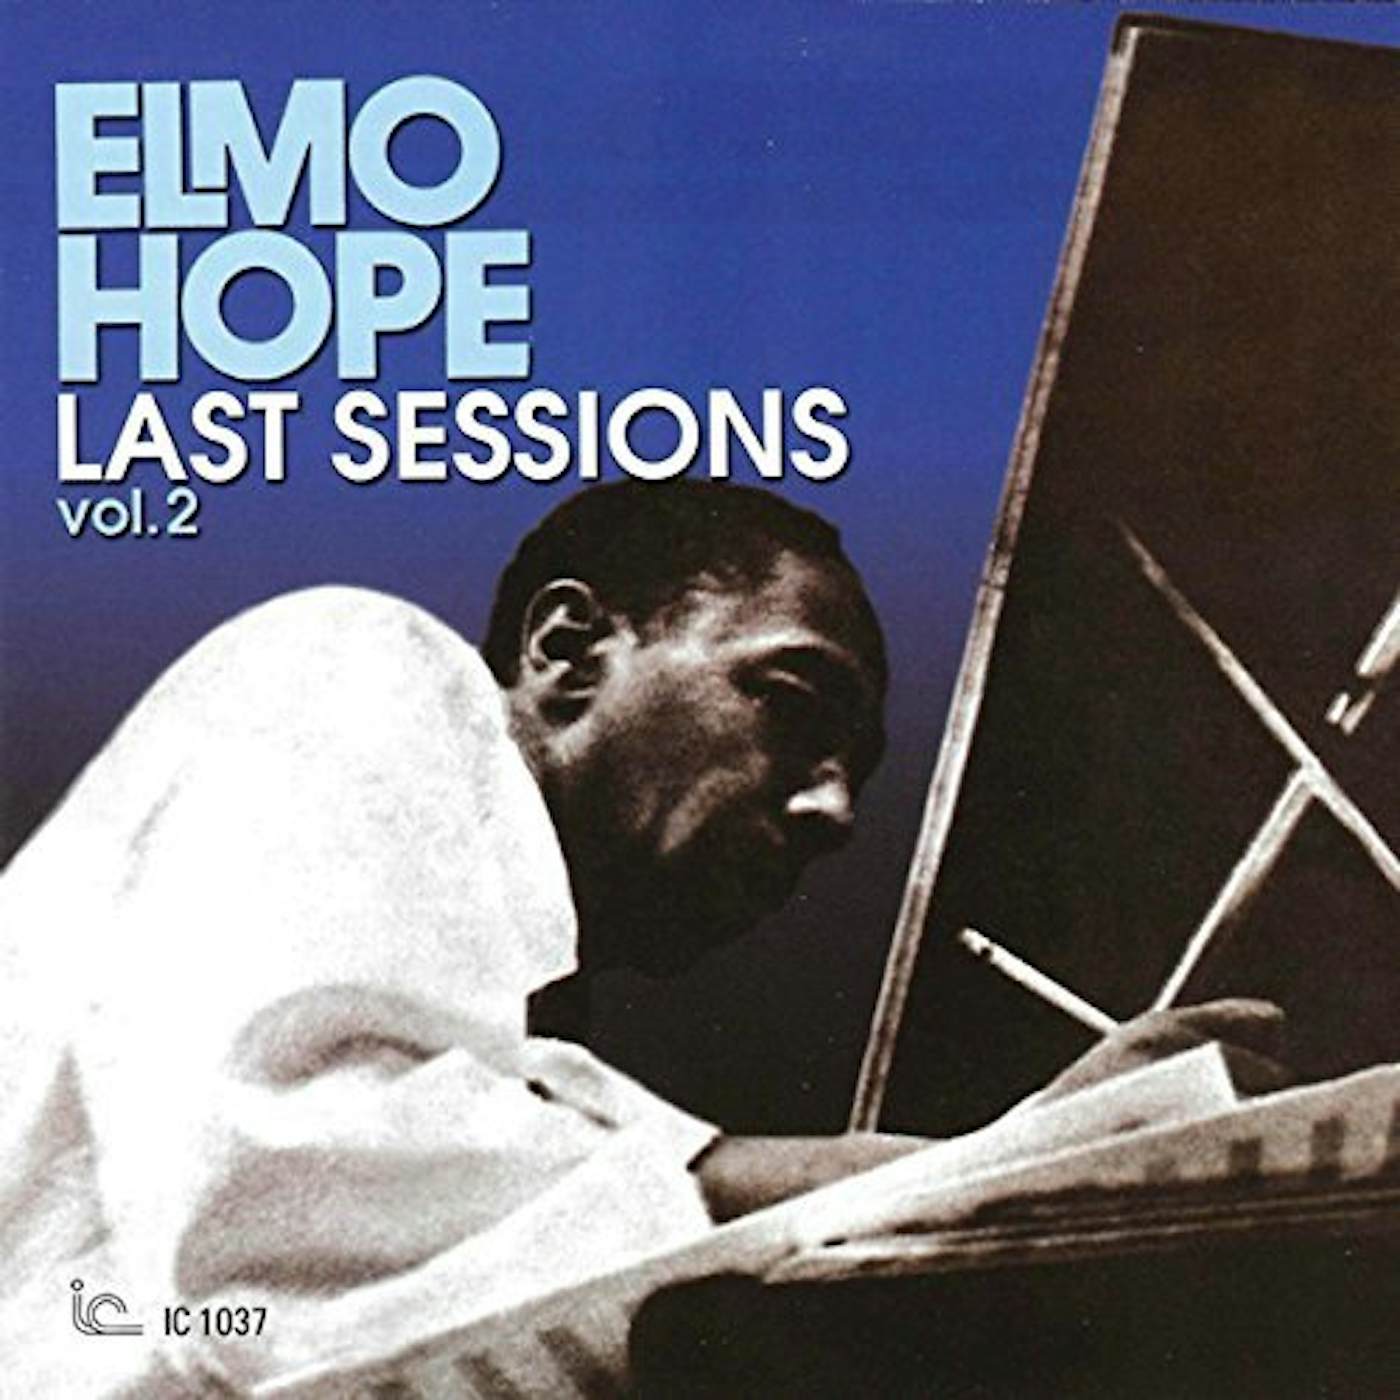 Elmo Hope LAST SESSIONS VOL 2 CD